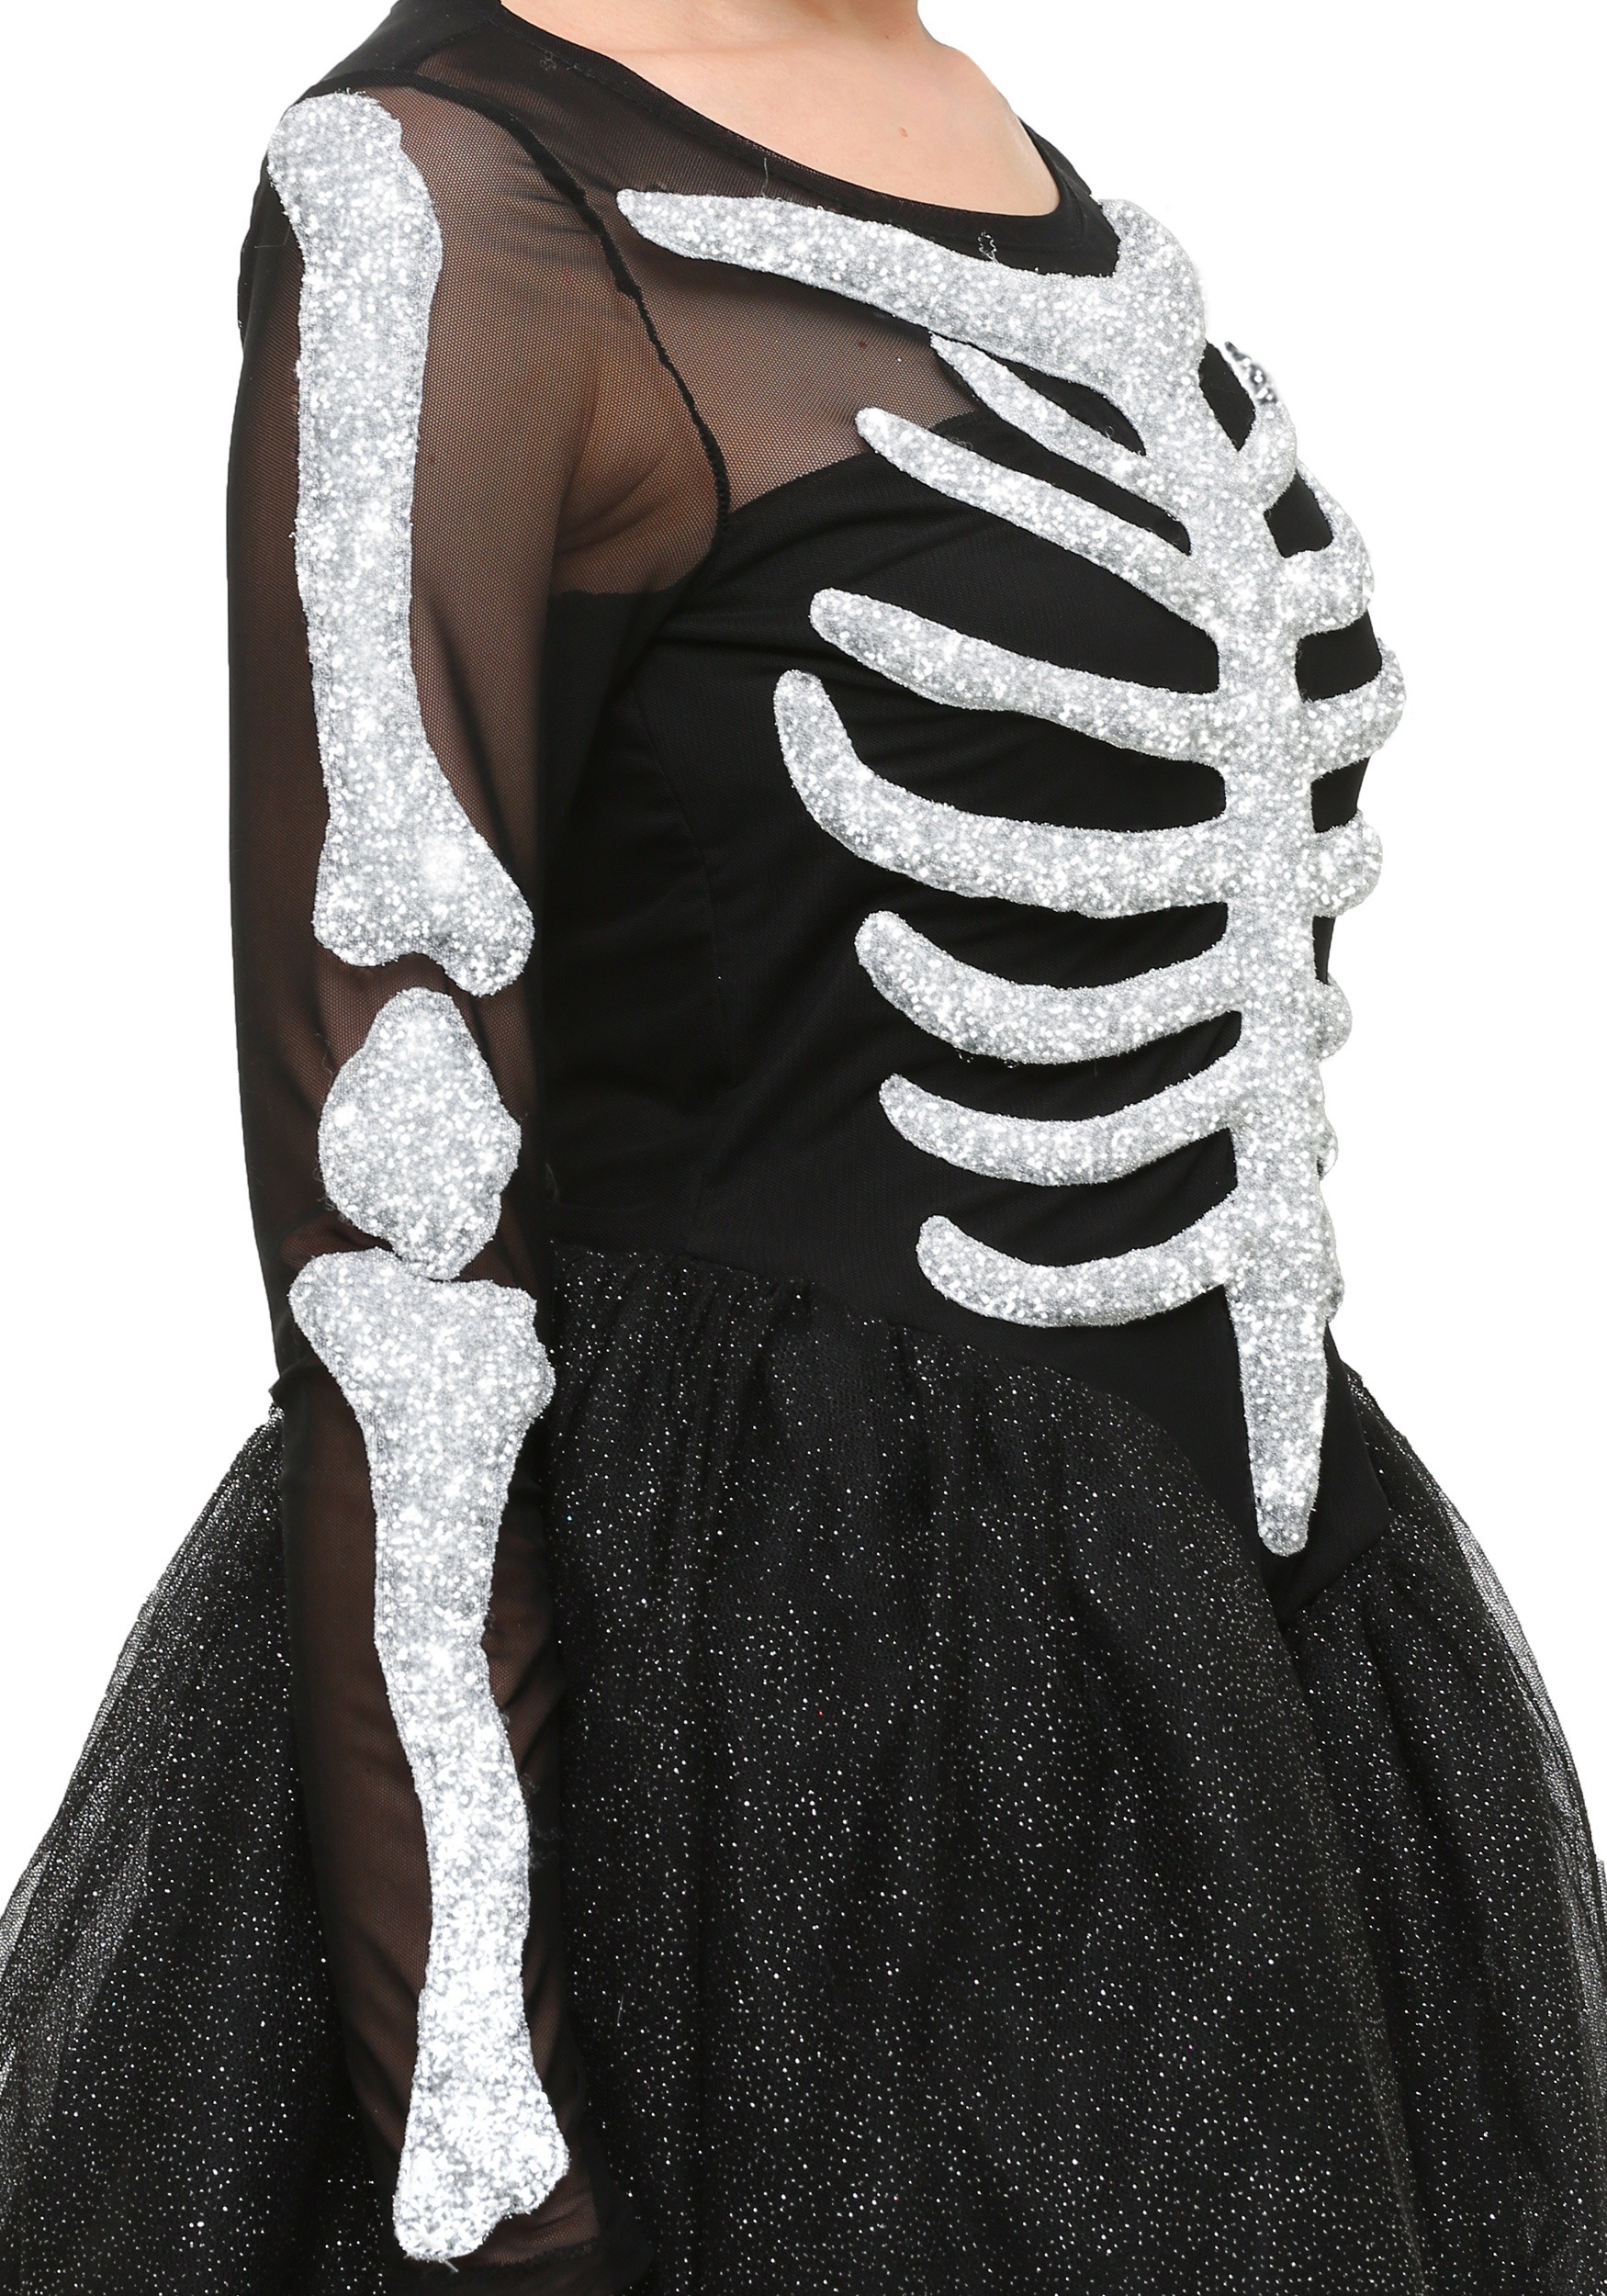 Women's Skeleton Beauty Plus Size Costume 1X 2X 3X 4X